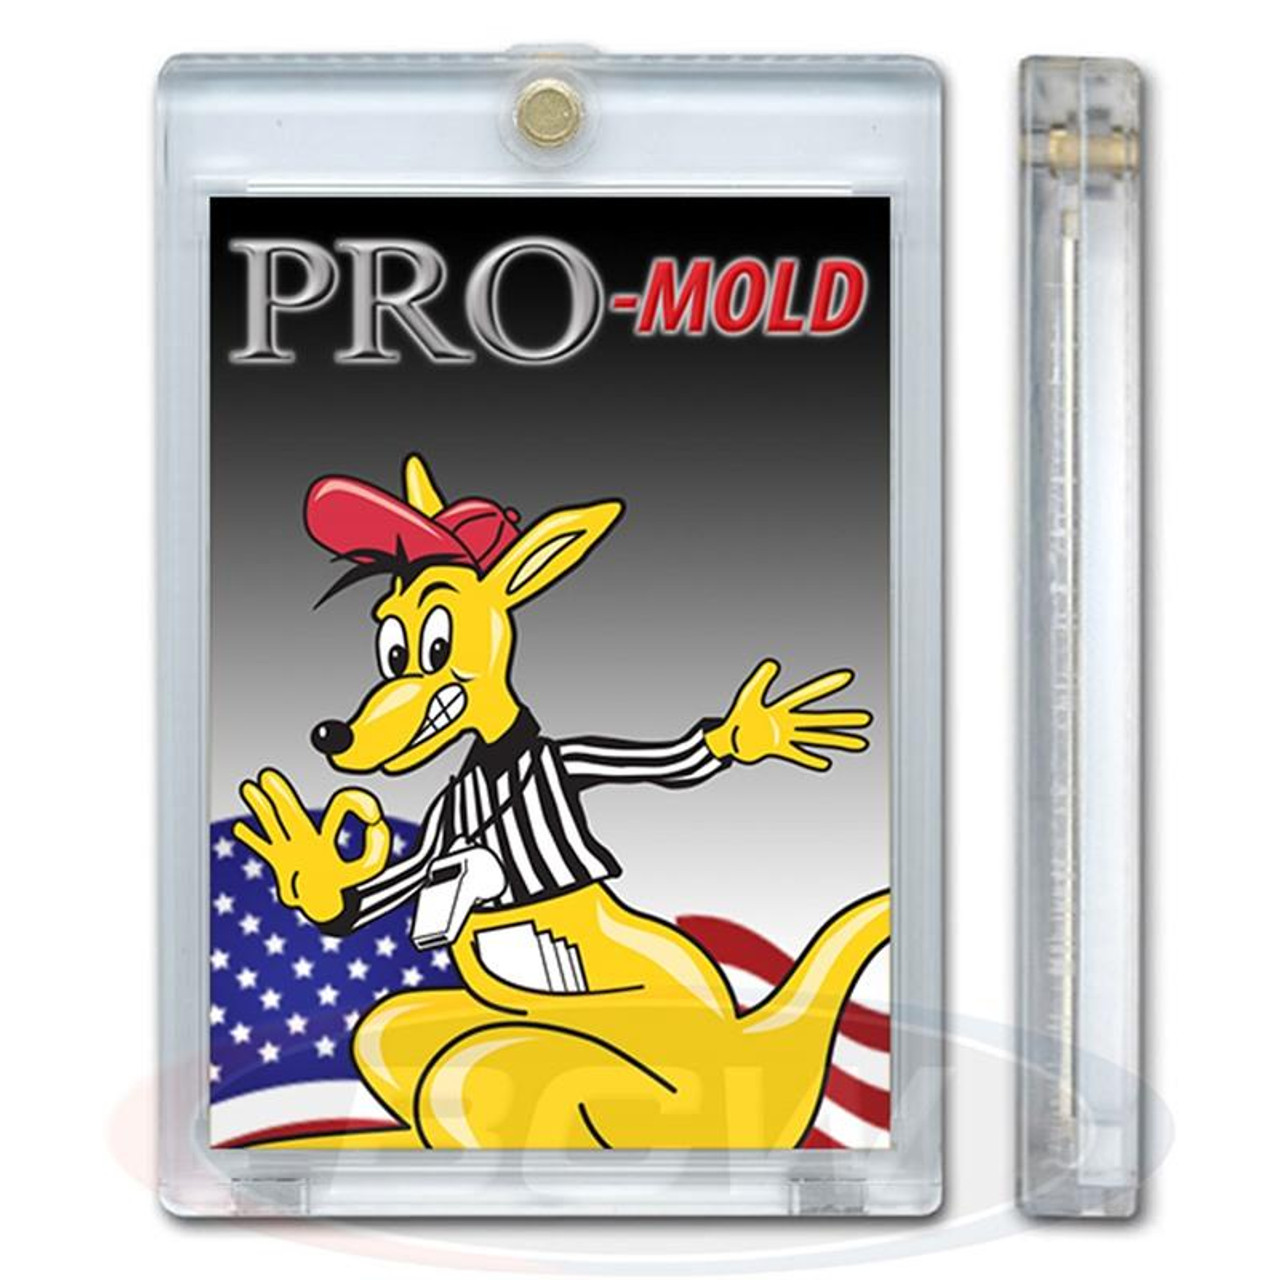 Pro-Mold Magnetic Card Holder 100pt - 20ct Box